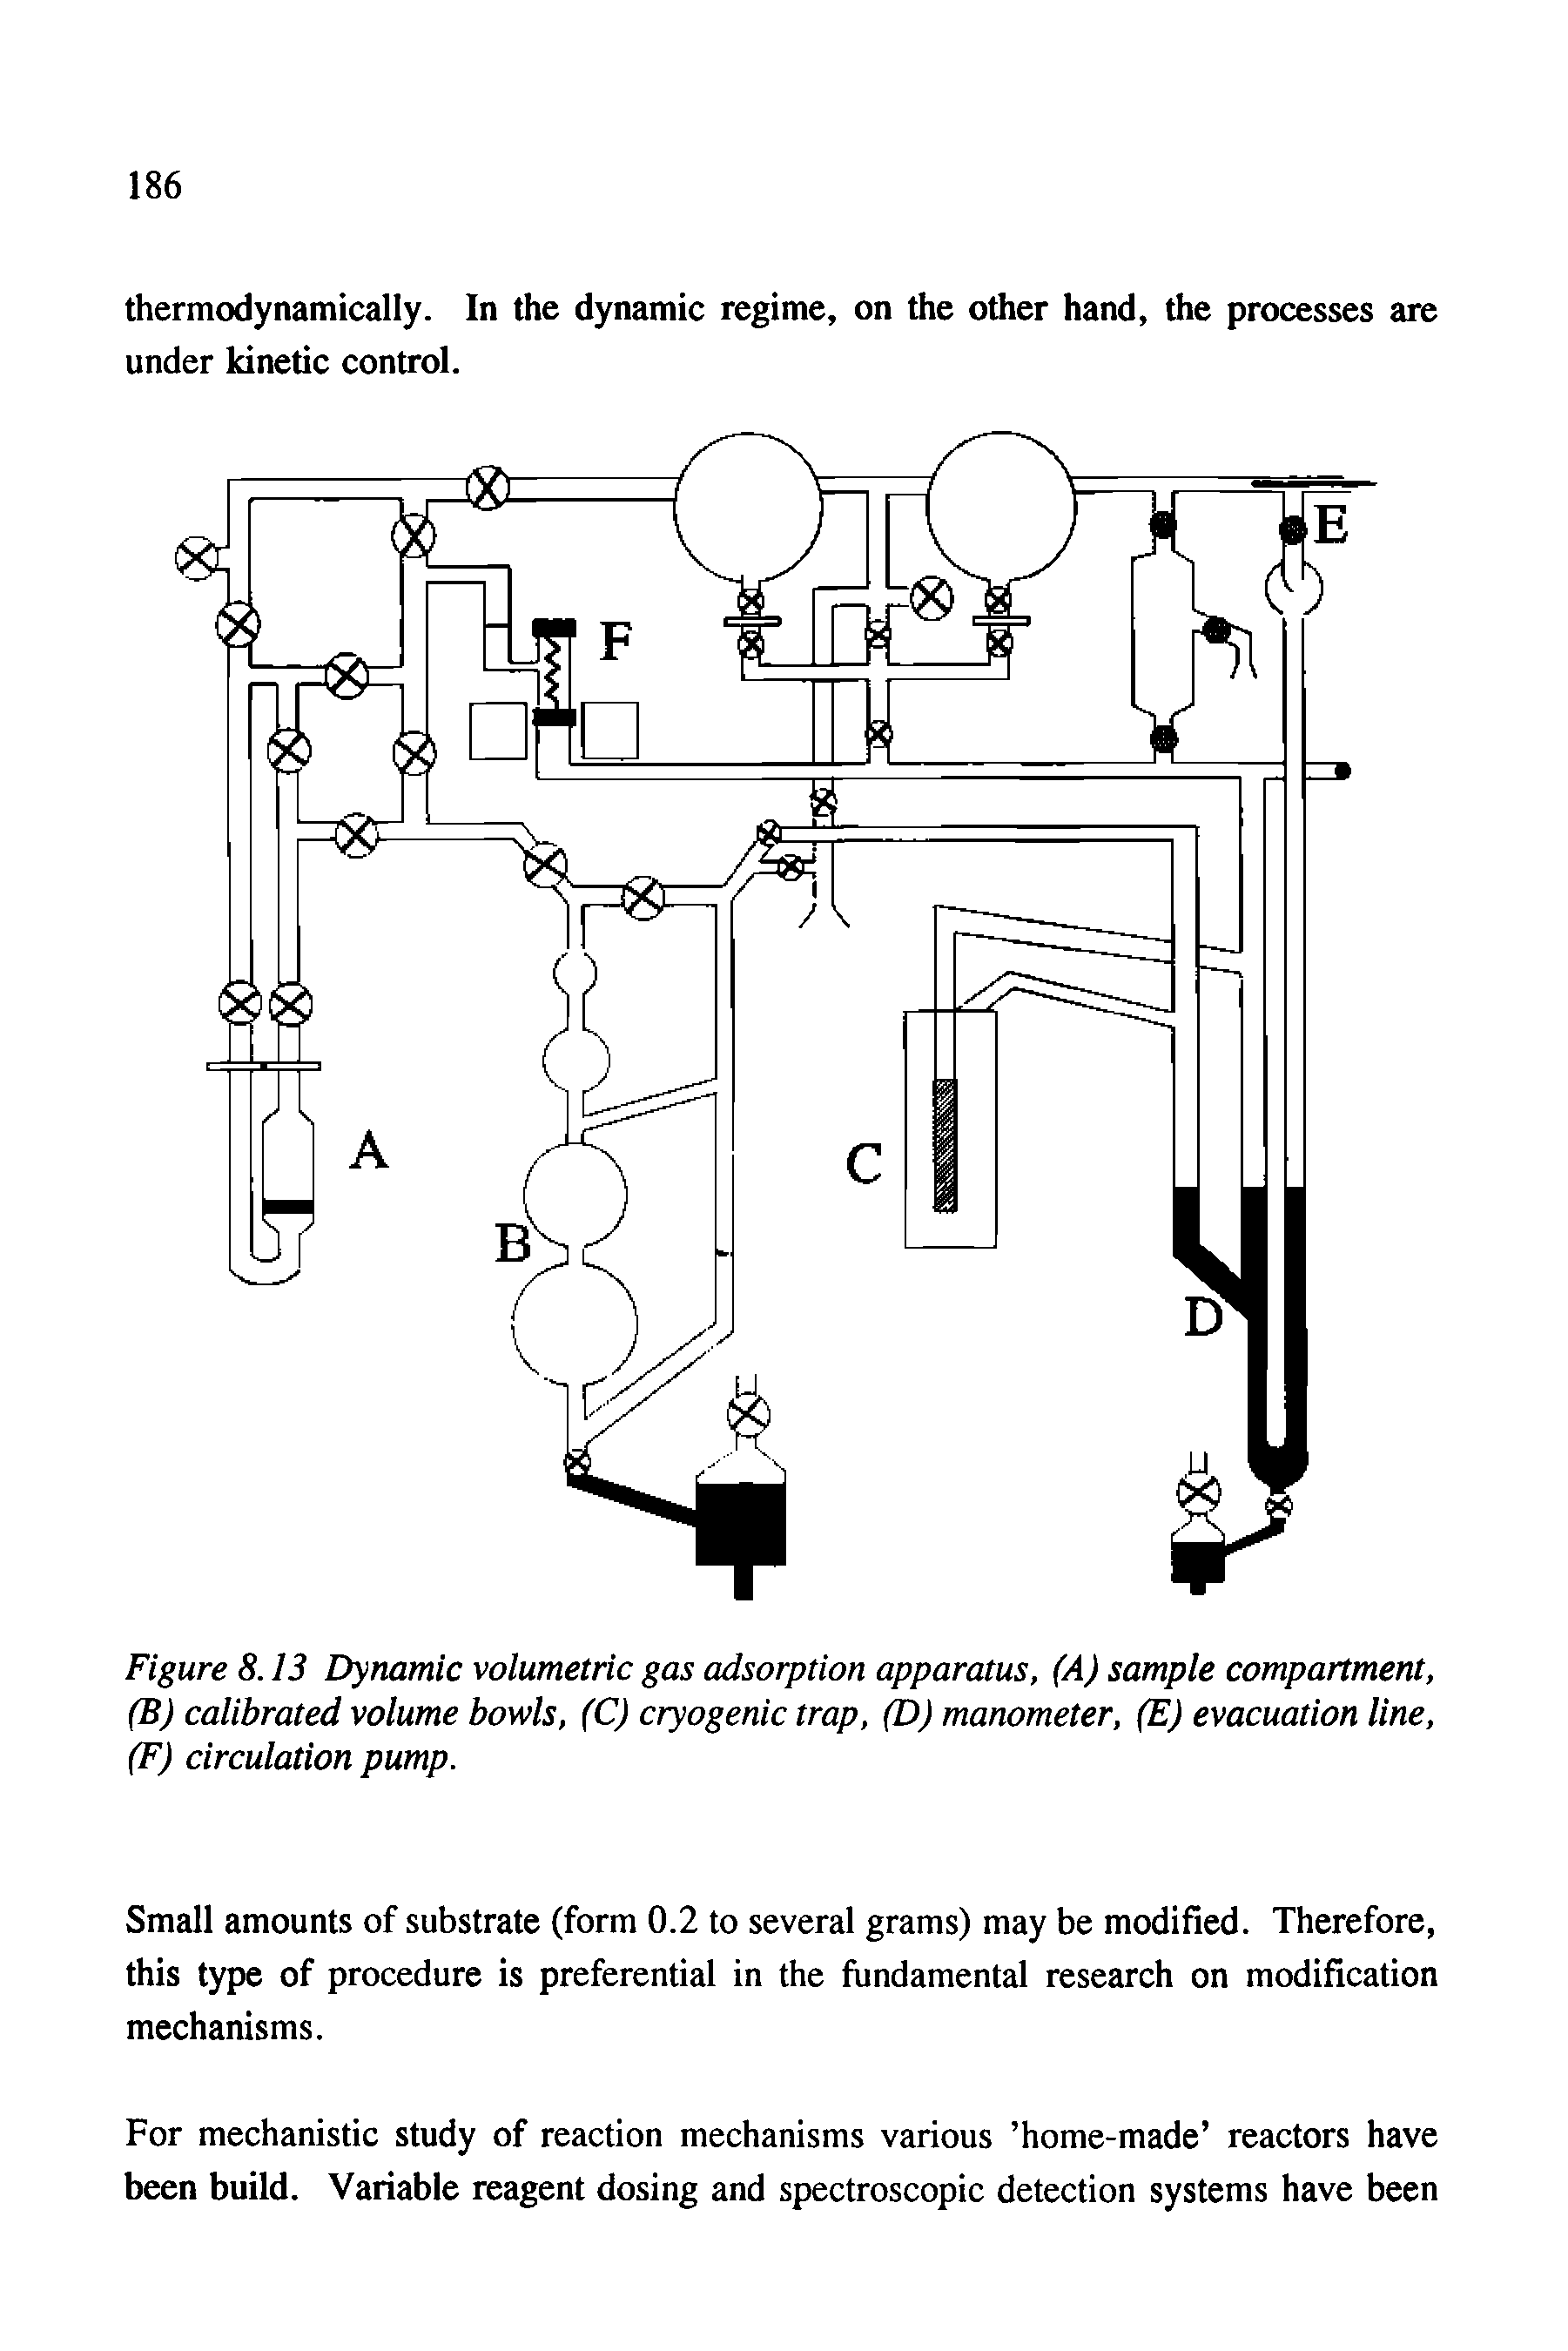 Figure 8.13 Dynamic volumetric gas adsorption apparatus, (A) sample compartment, (B) calibrated volume bowls, (C) cryogenic trap, (D) manometer, (E) evacuation line, (F) circulation pump.